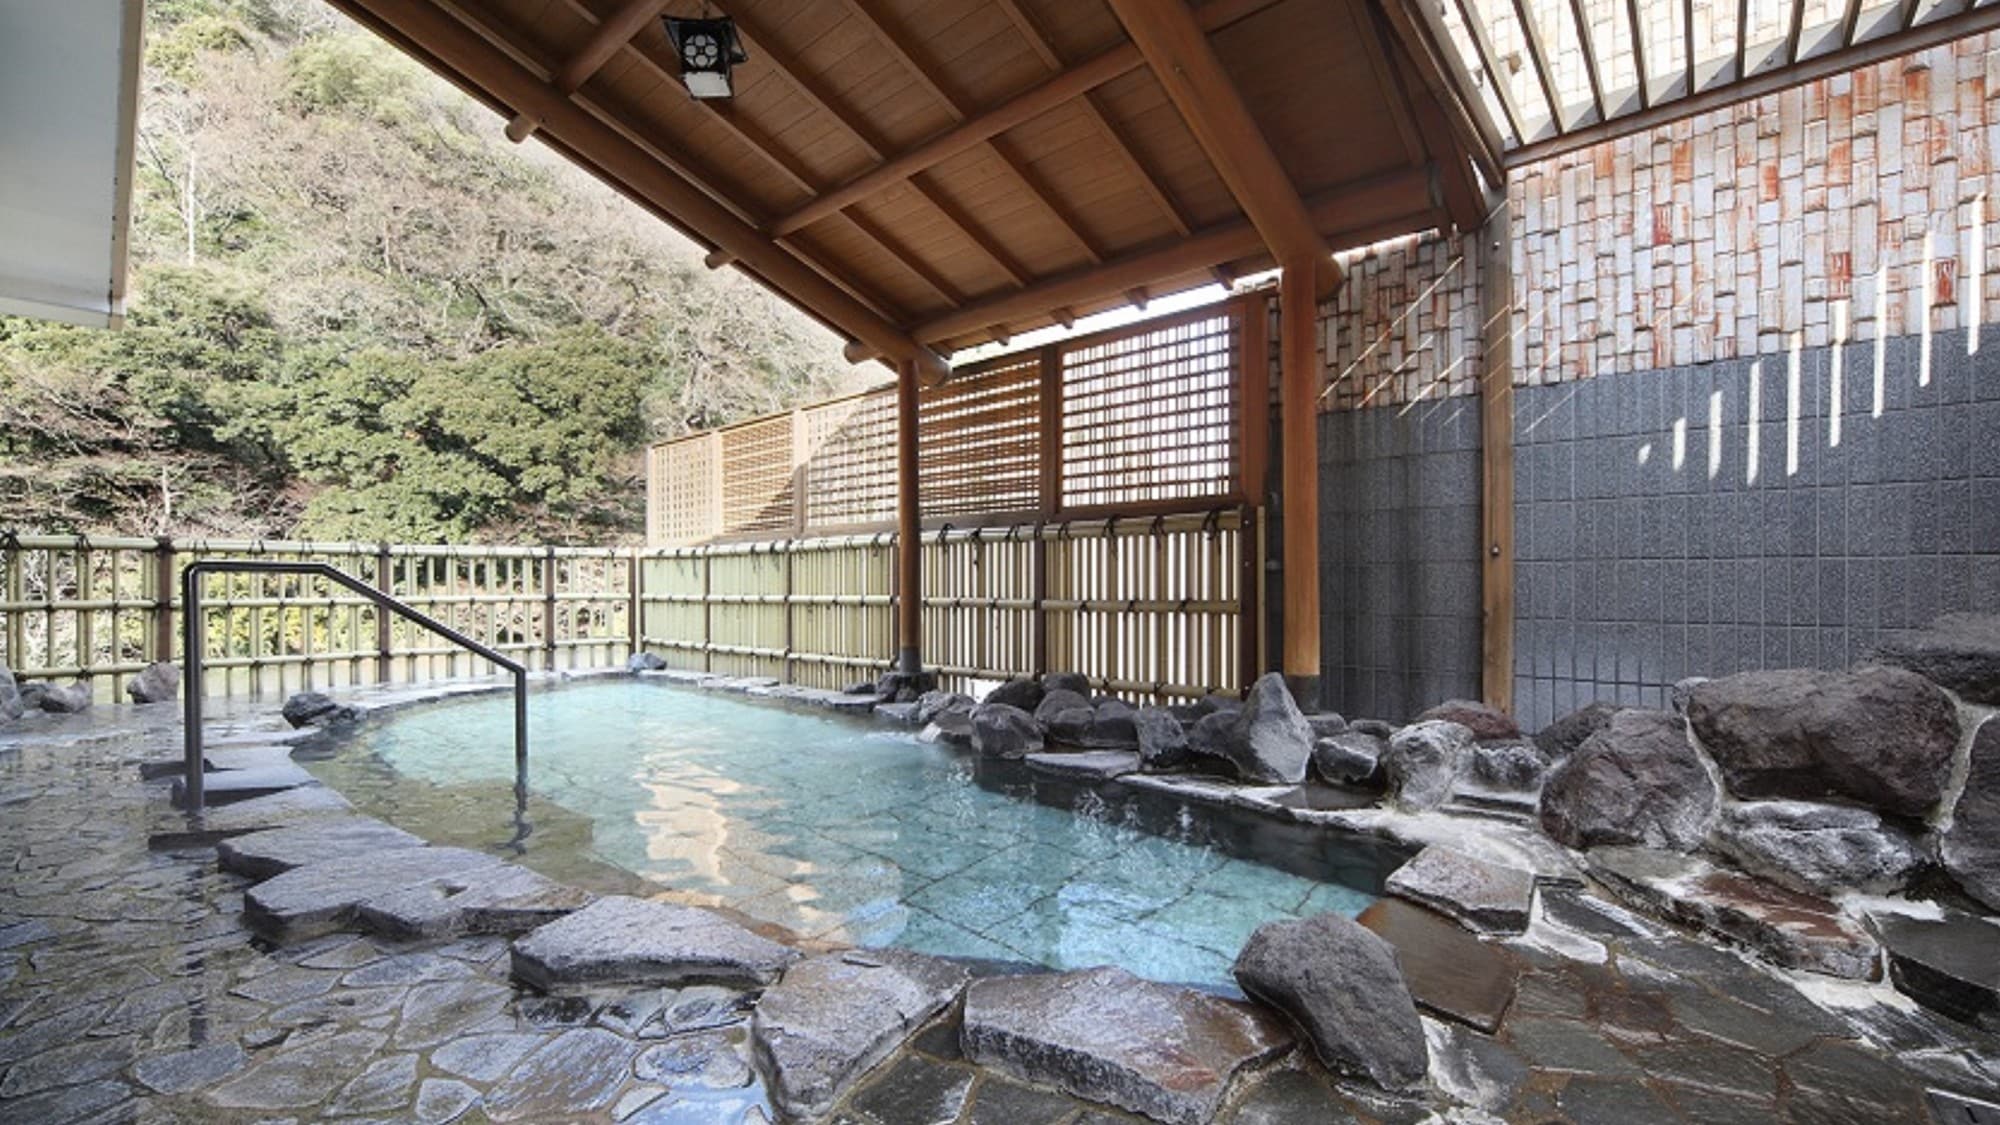 Large public bath "Katsura no Yu" Observation open-air bath